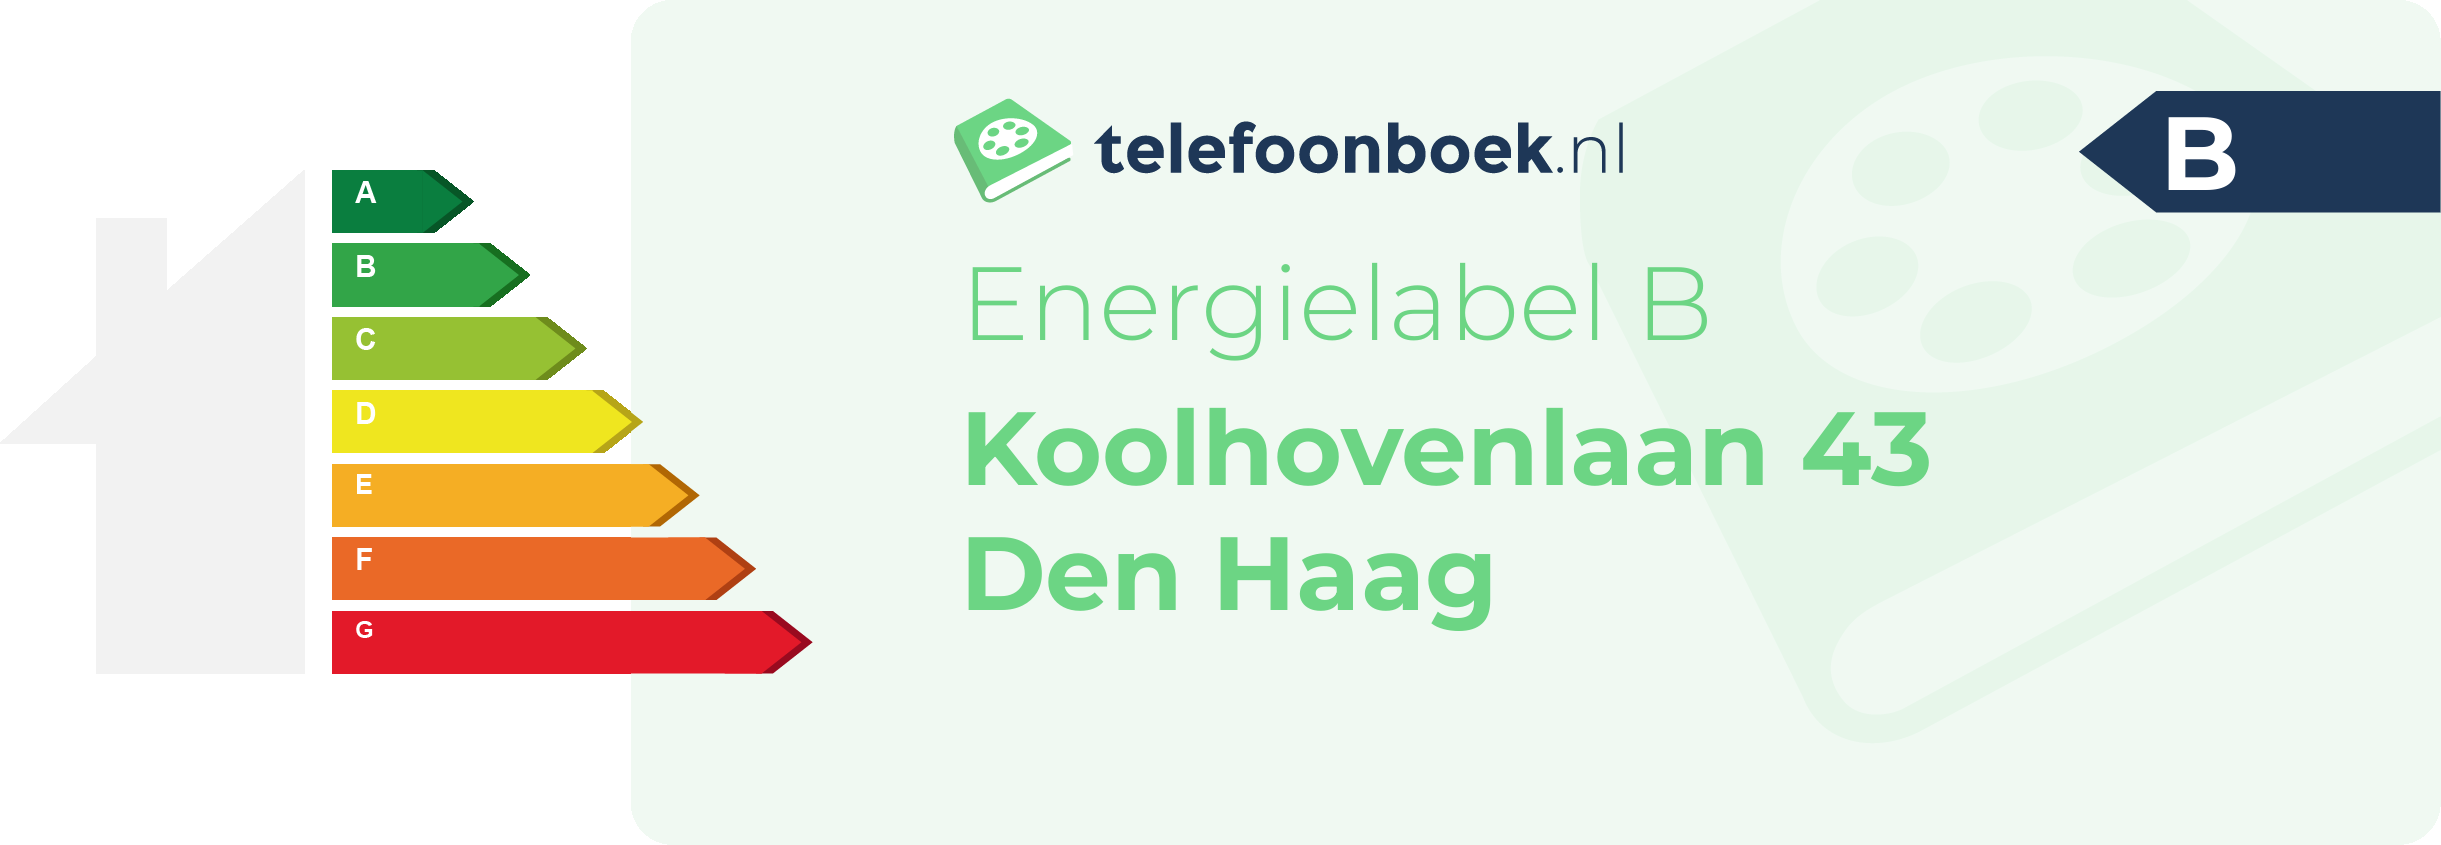 Energielabel Koolhovenlaan 43 Den Haag